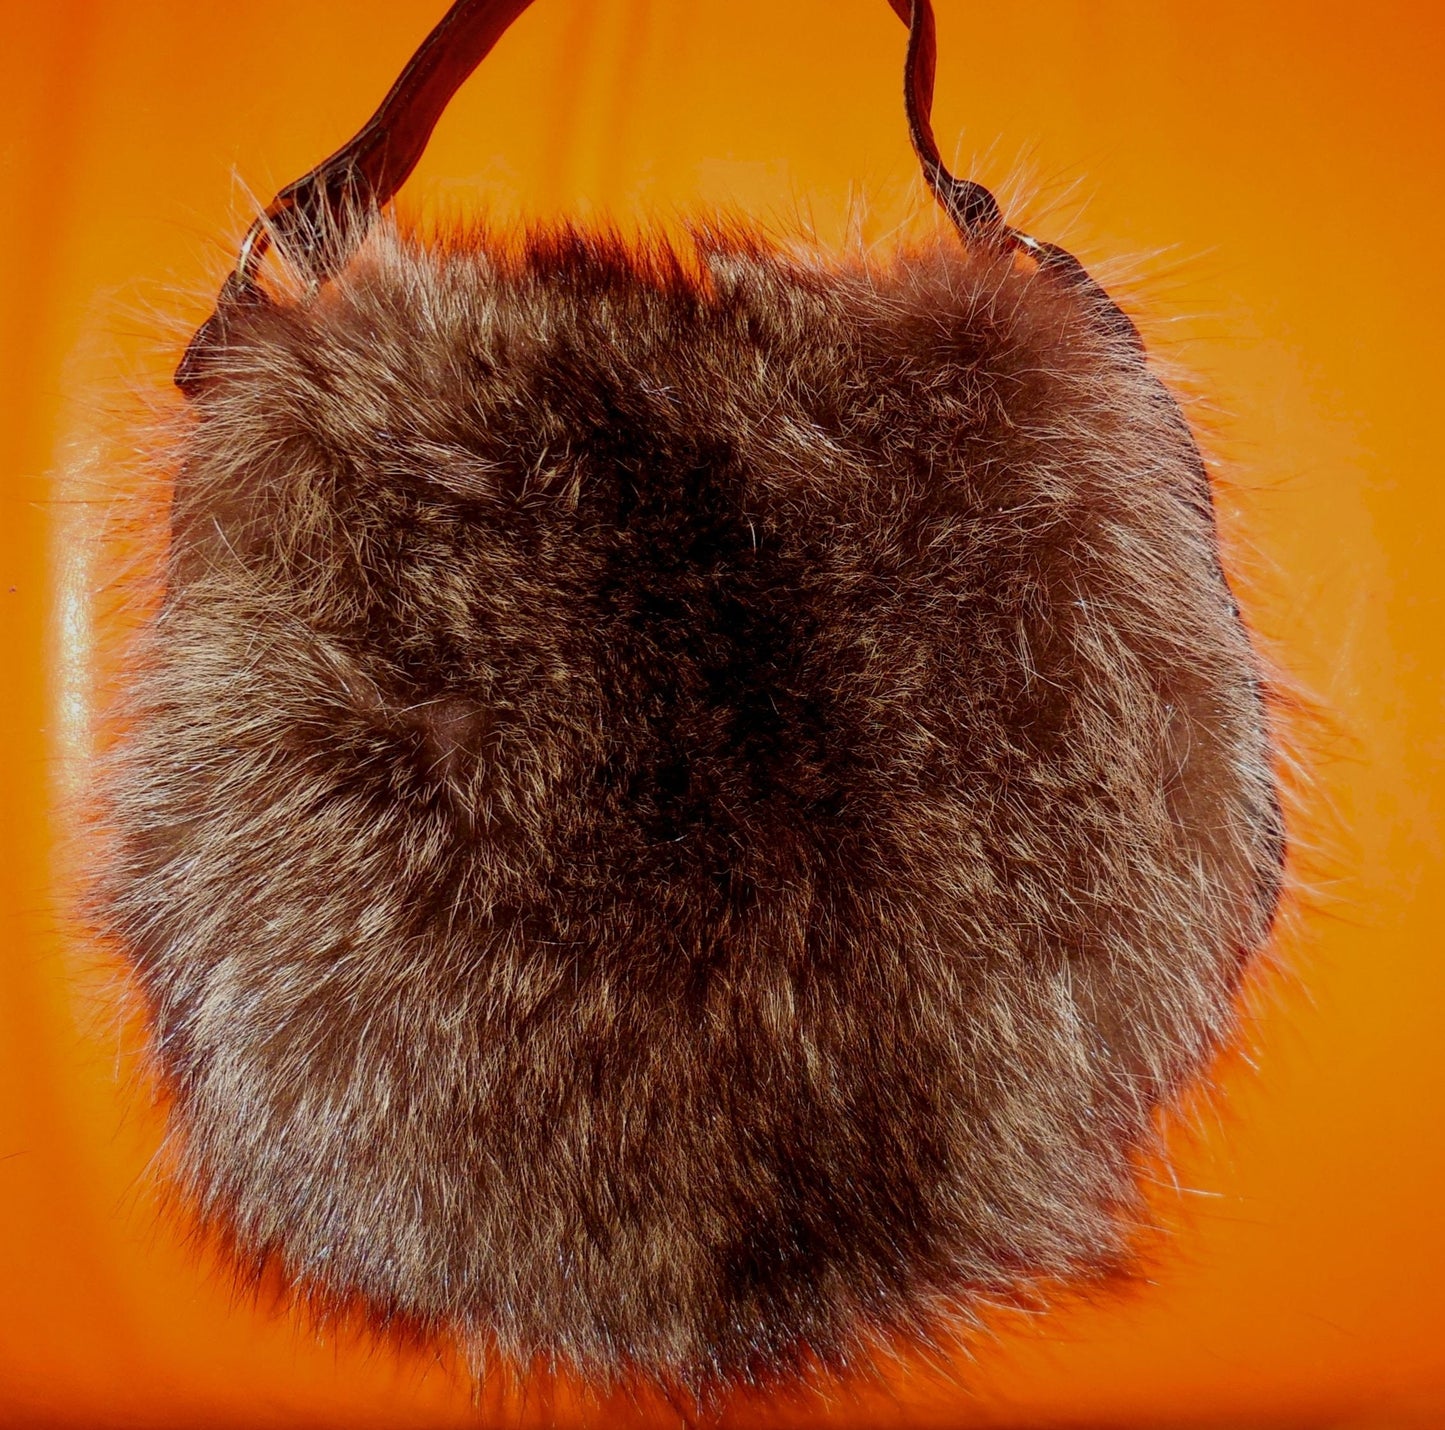 SALE Vintage Fur Muff 1980s Fluffy Raccoon Fur Leather Purse with Handwarmer Boho Mod